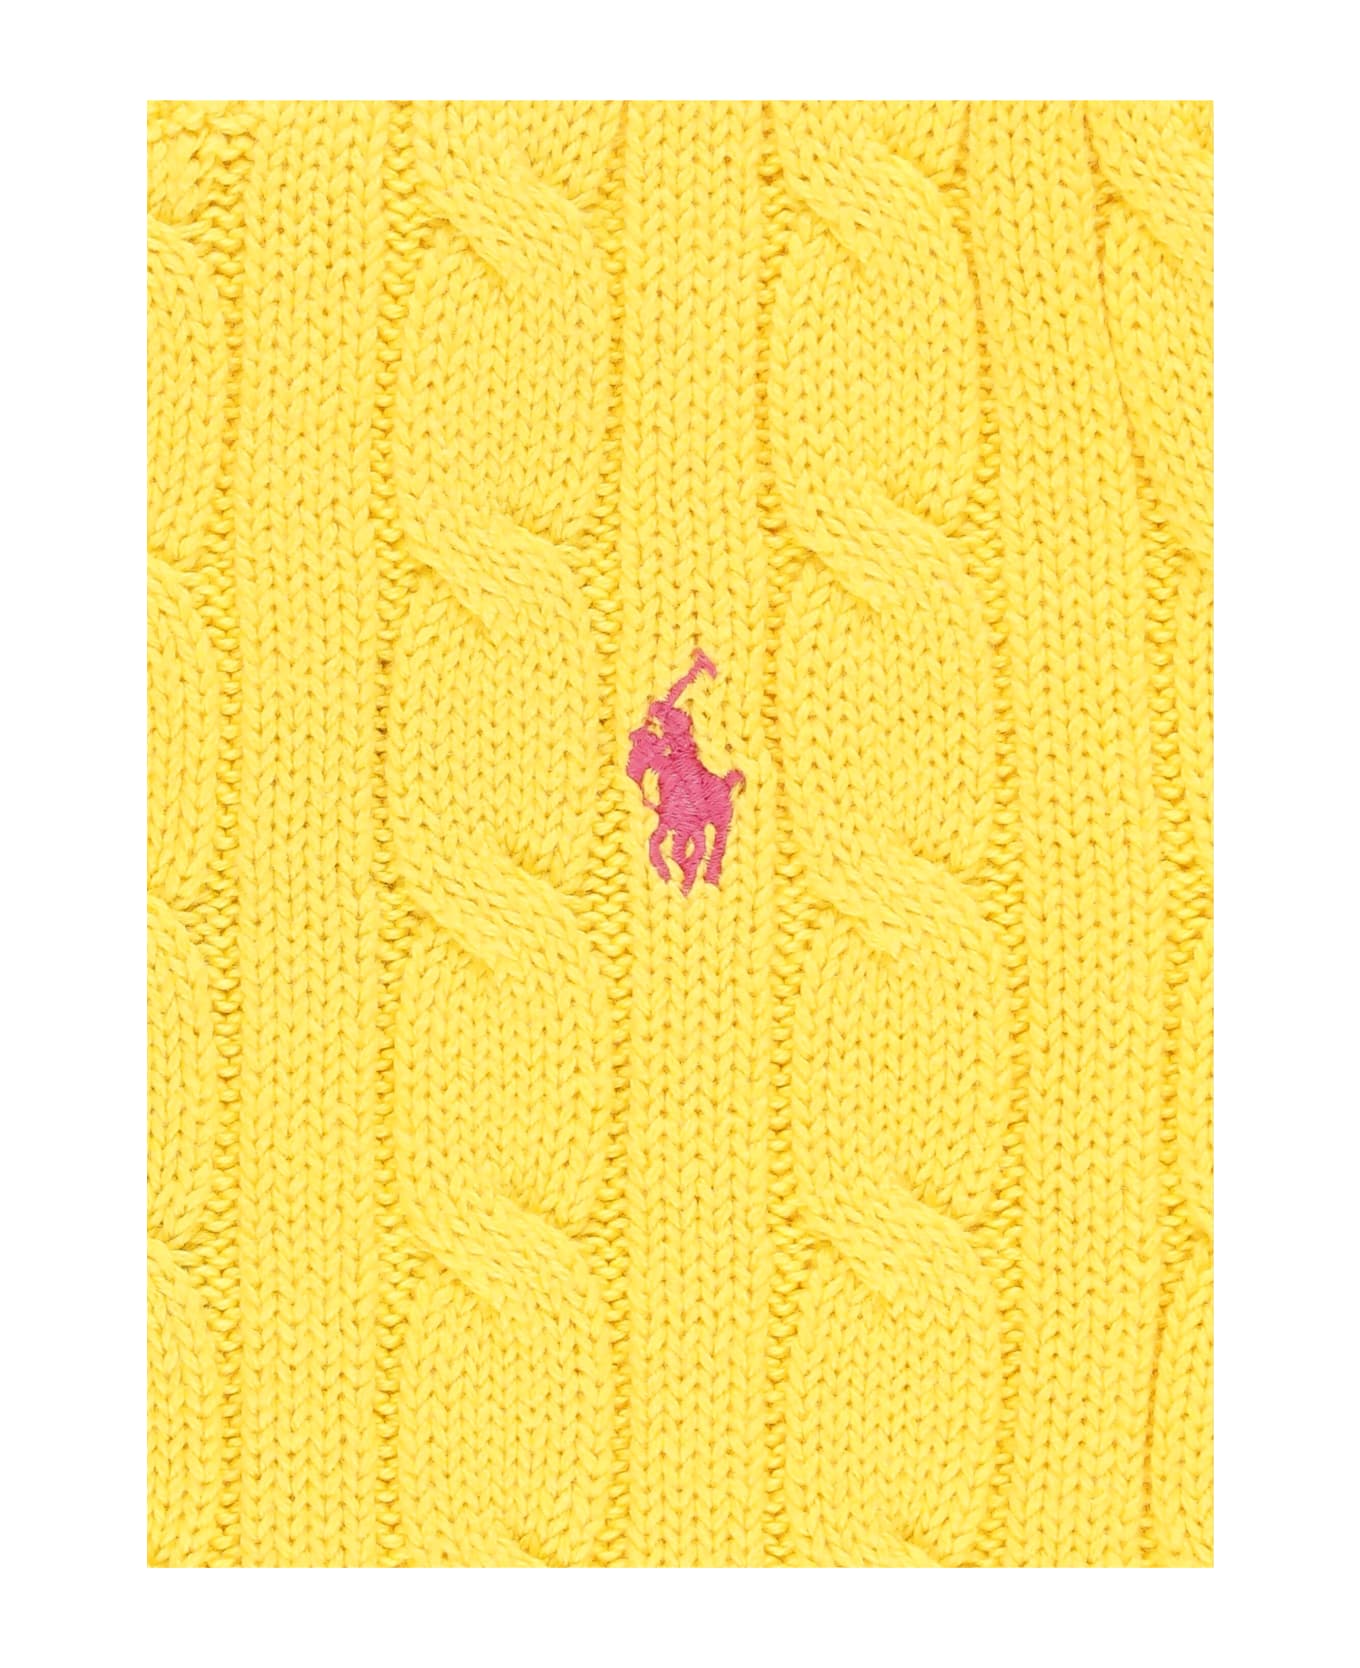 Ralph Lauren Pony Sweater - Yellow